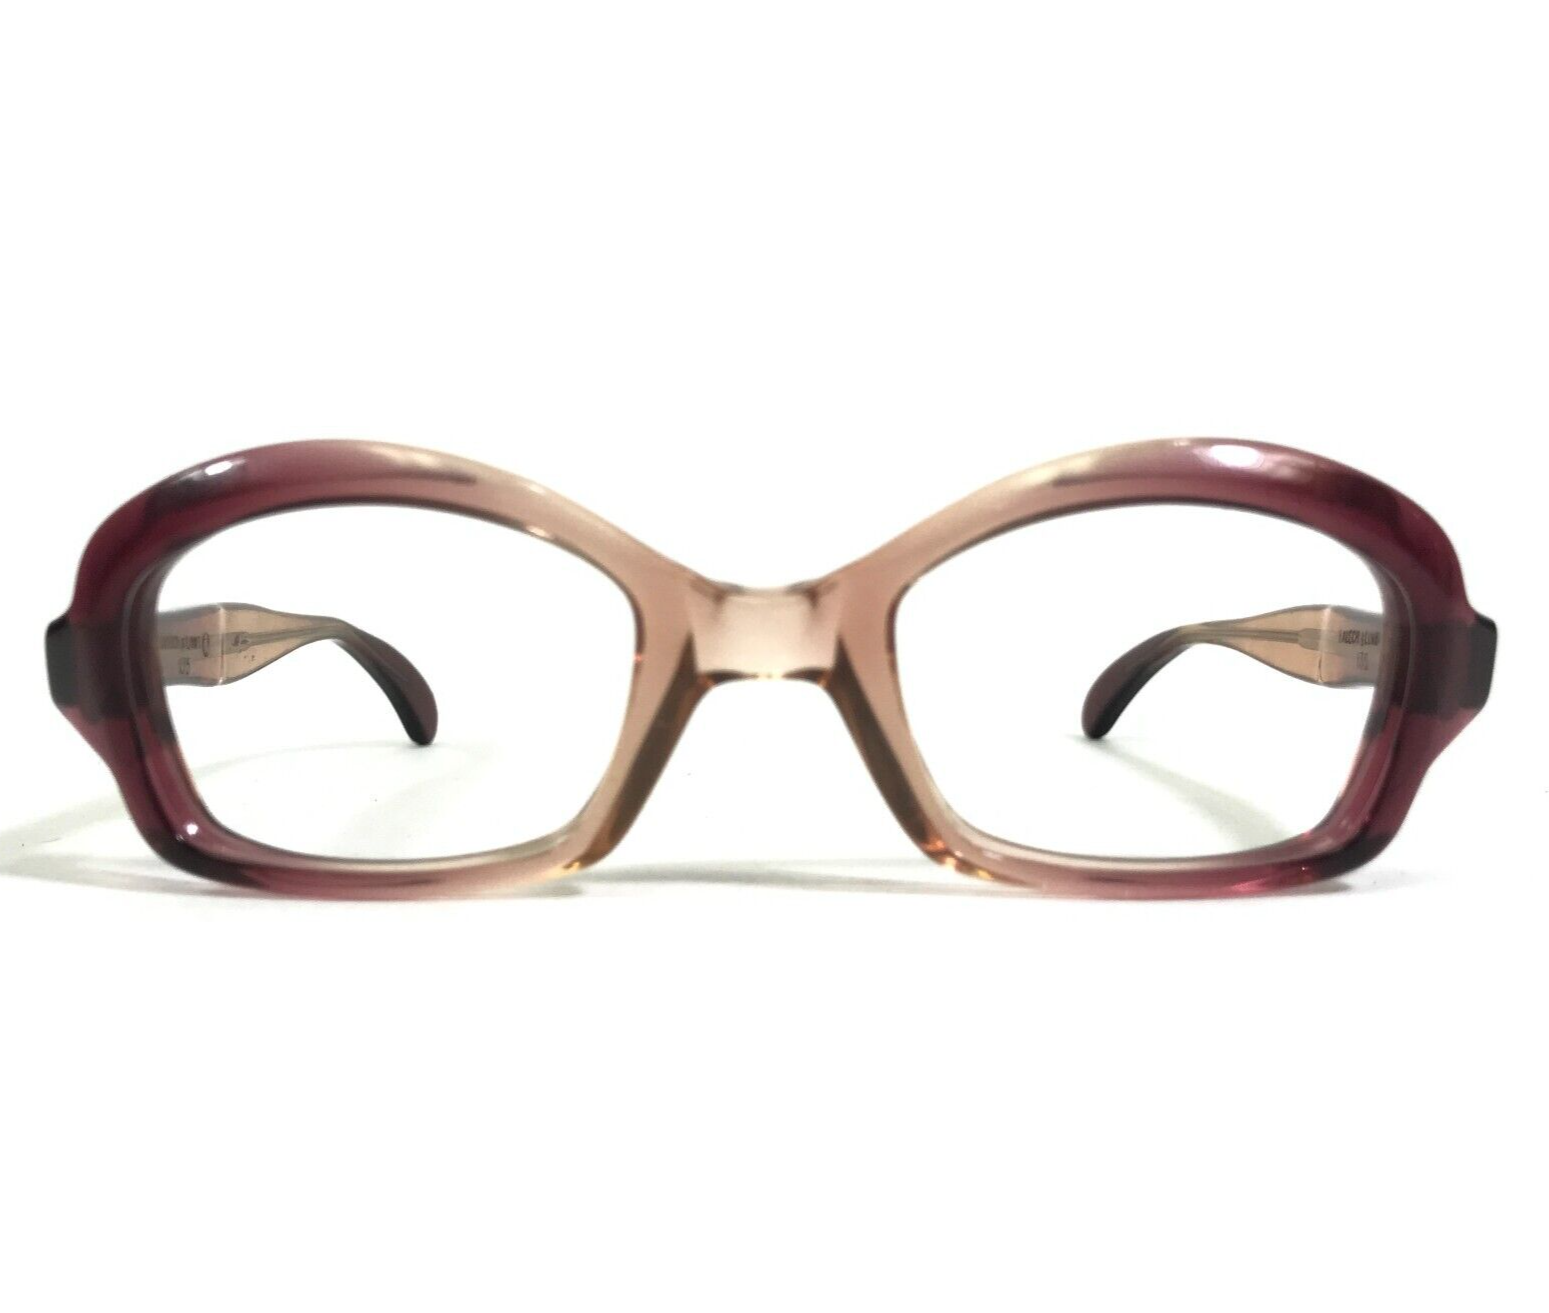 Vintage Bausch & Lomb Petite Small Eyeglasses Frames Brown Purple Fade 40-20-135 - $37.19